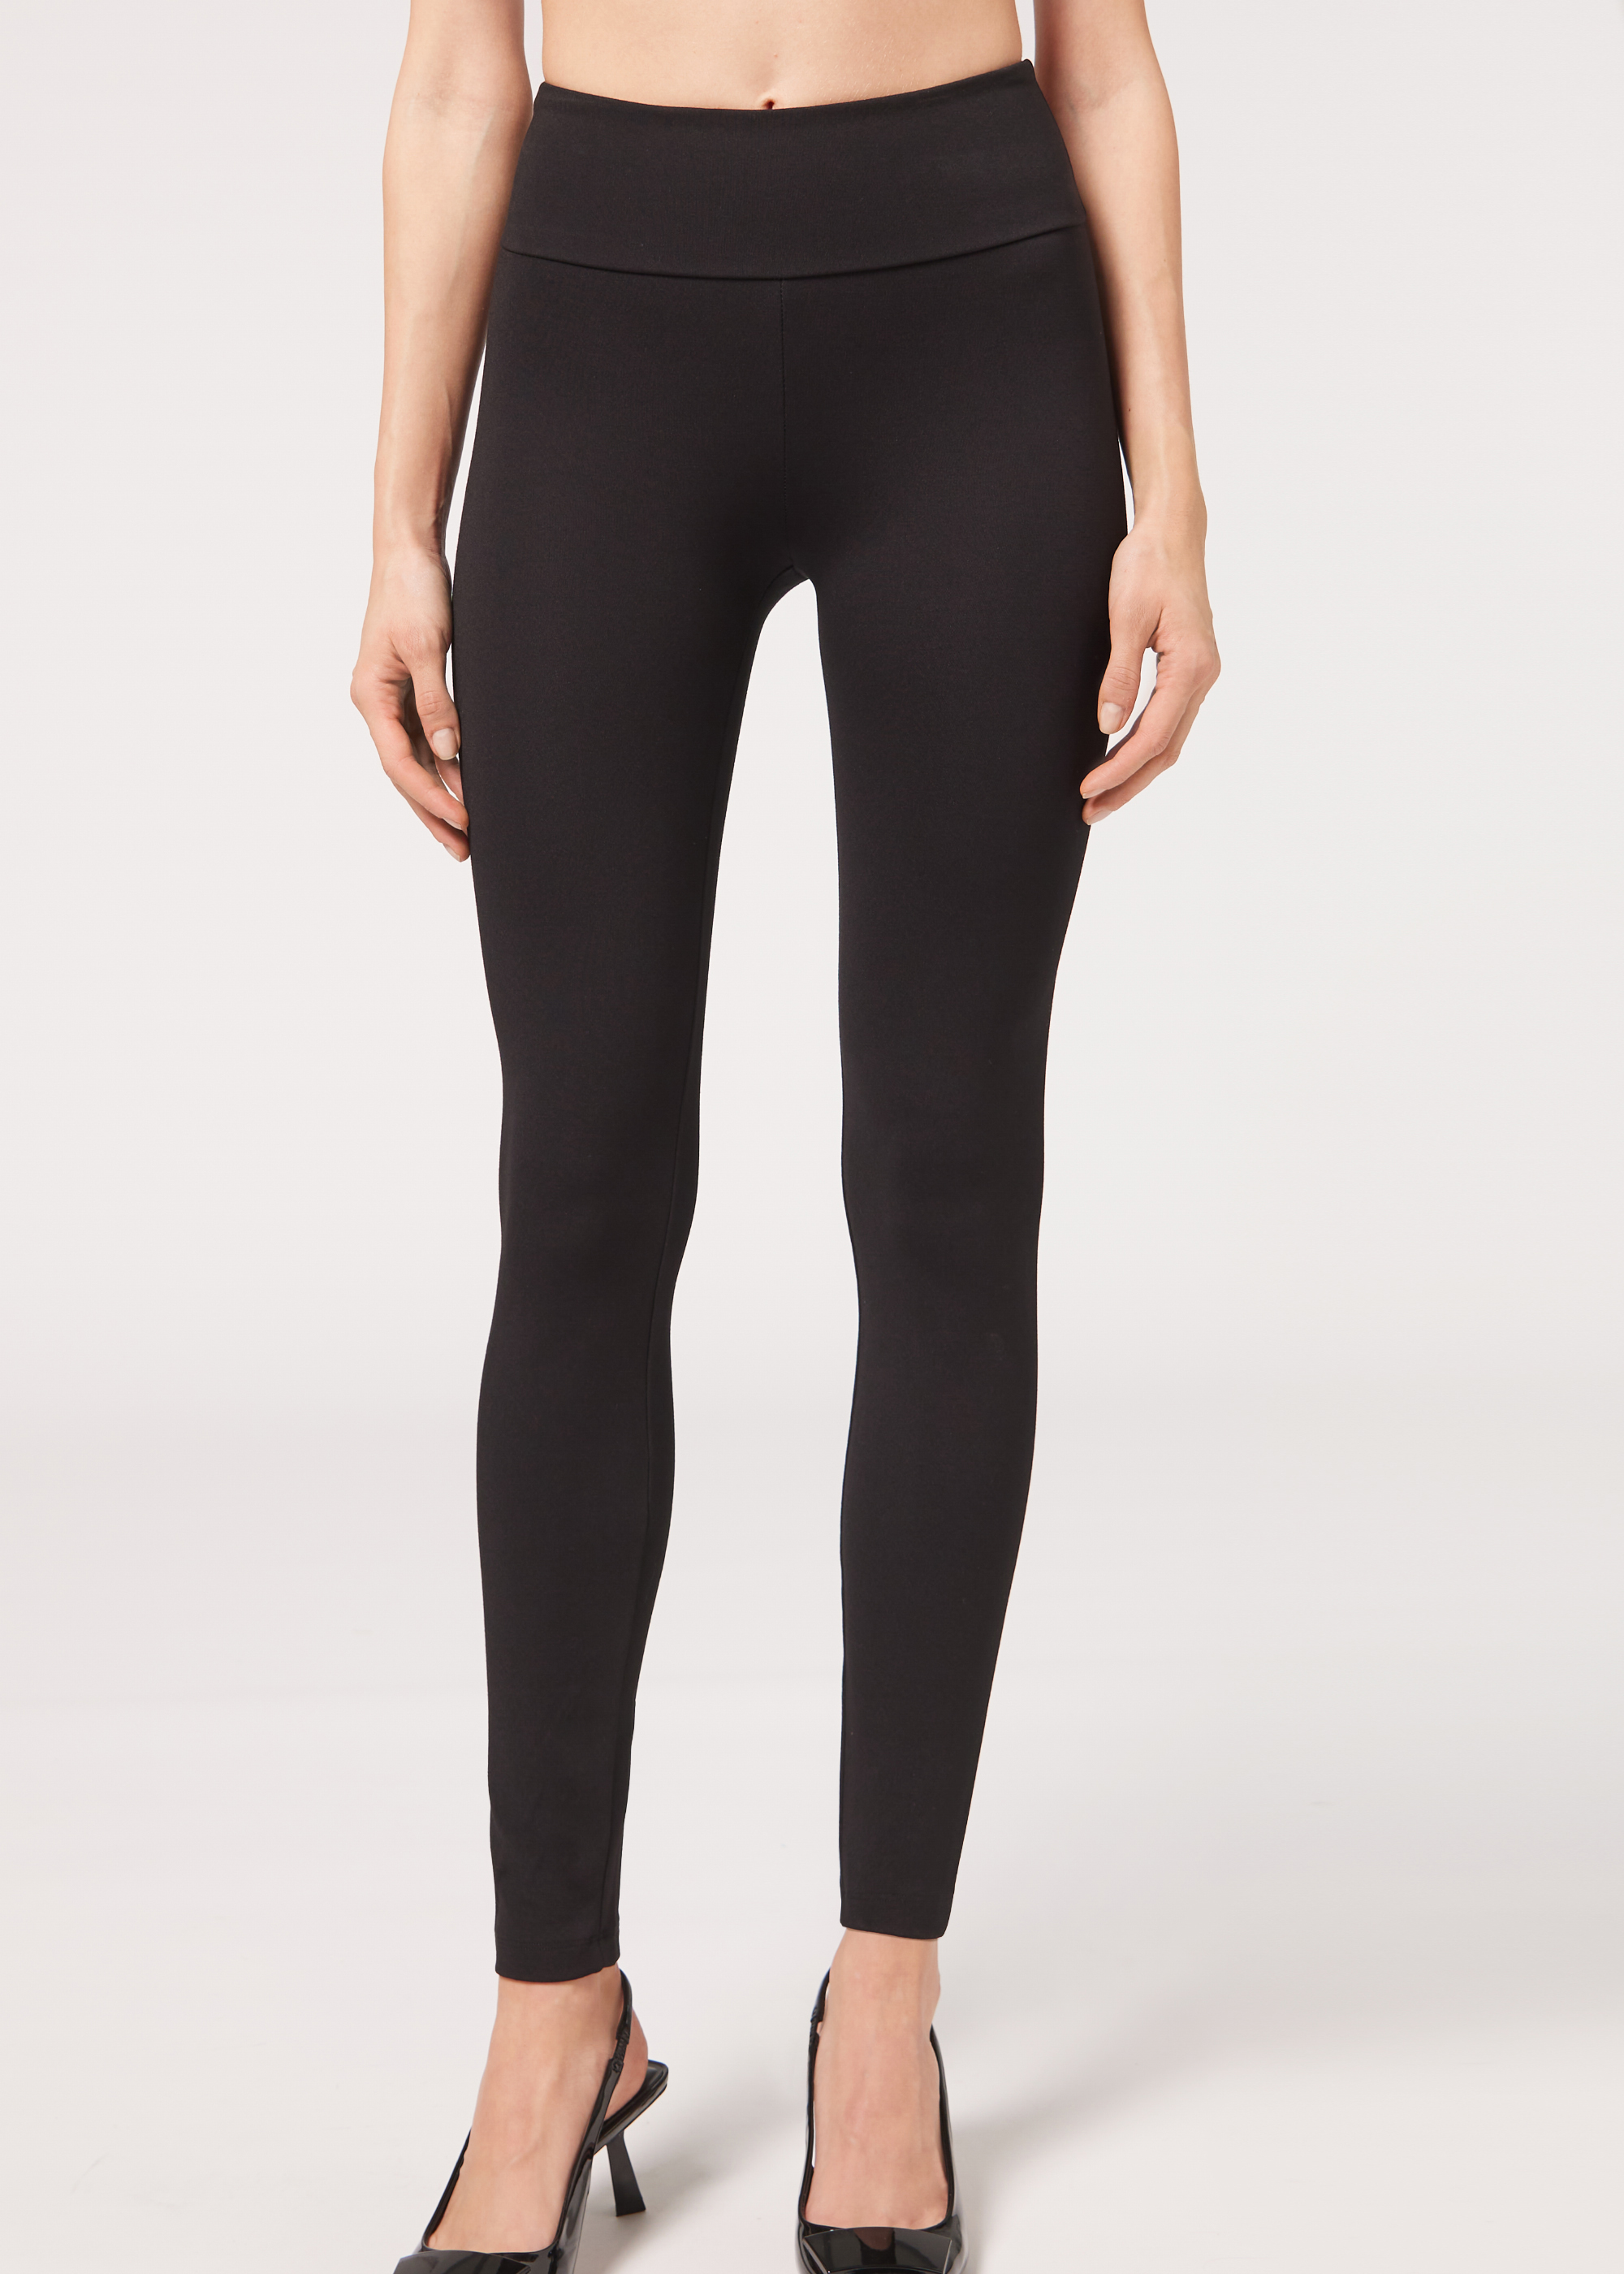 Merona black patterned tights sz Medium/tall